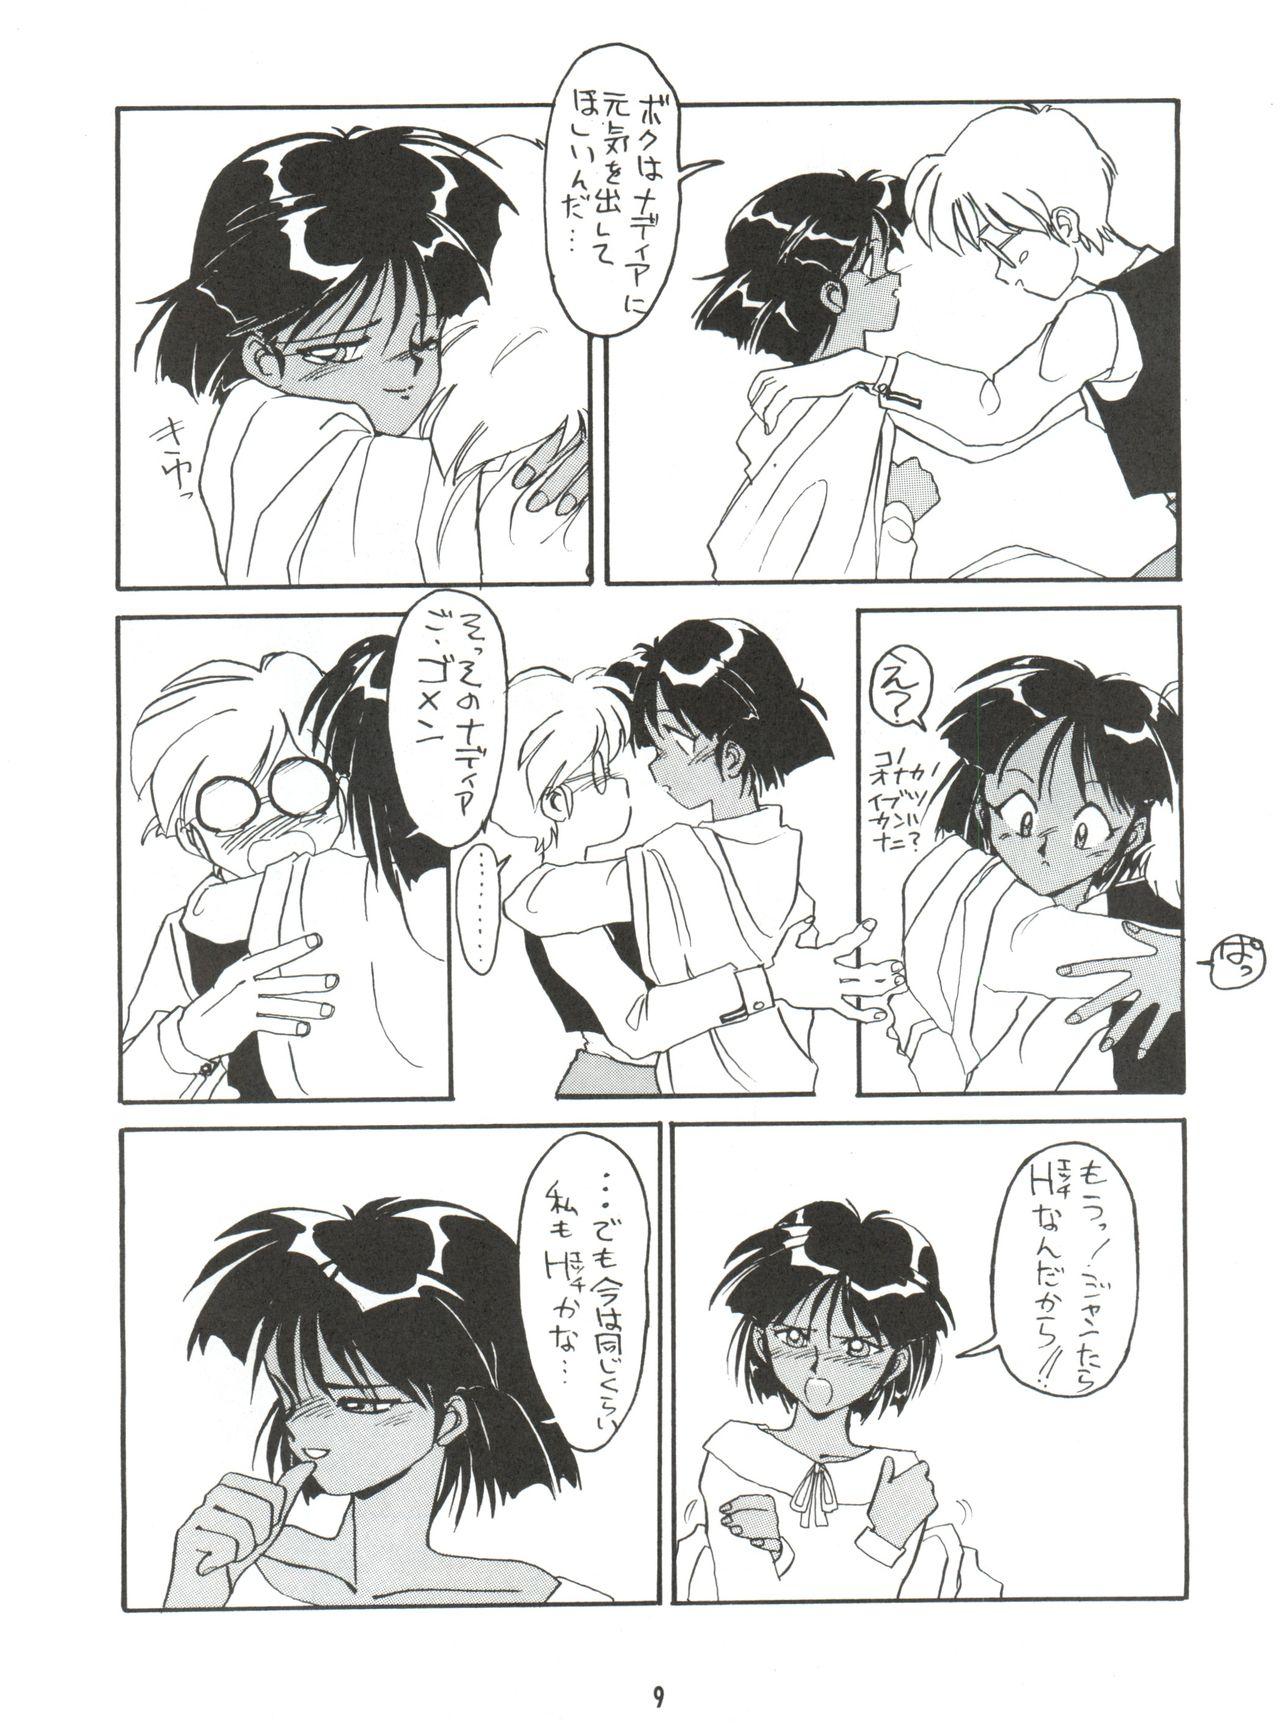 Squirt Hitotsubu no Umi 3 - Fushigi no umi no nadia Squirters - Page 9